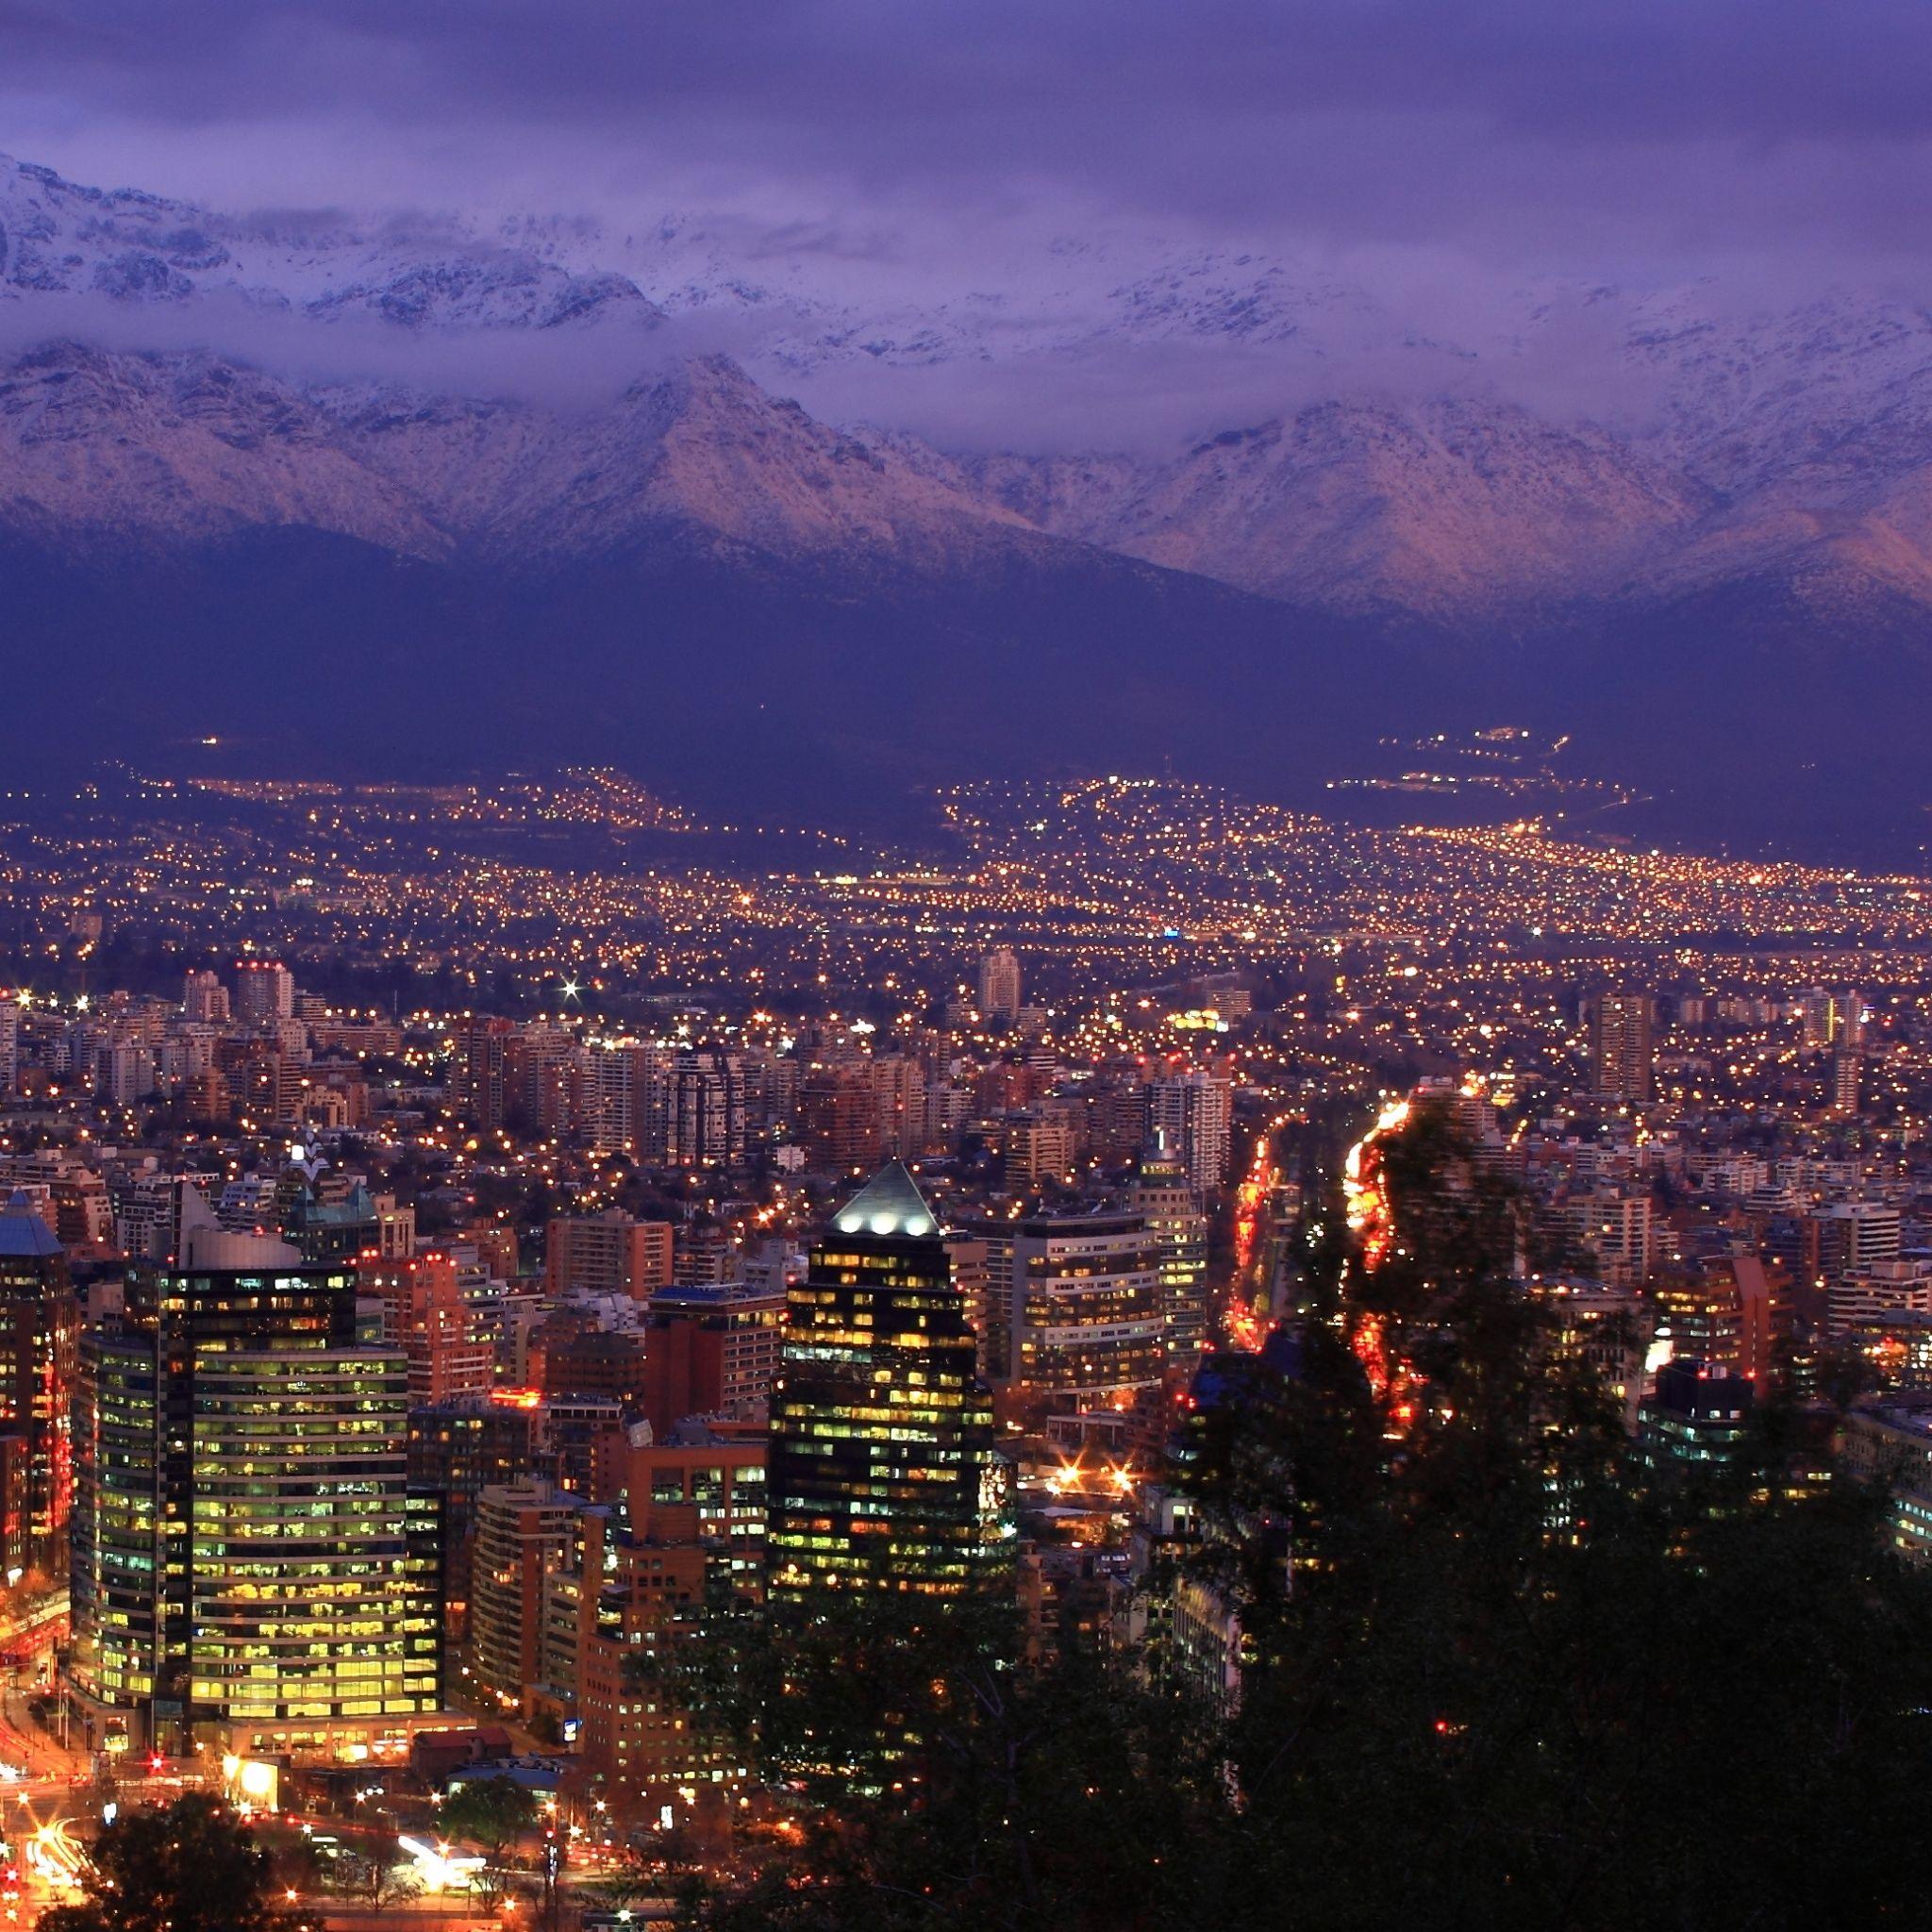 Santiago Chile iPad Air Wallpaper Download. iPhone Wallpaper